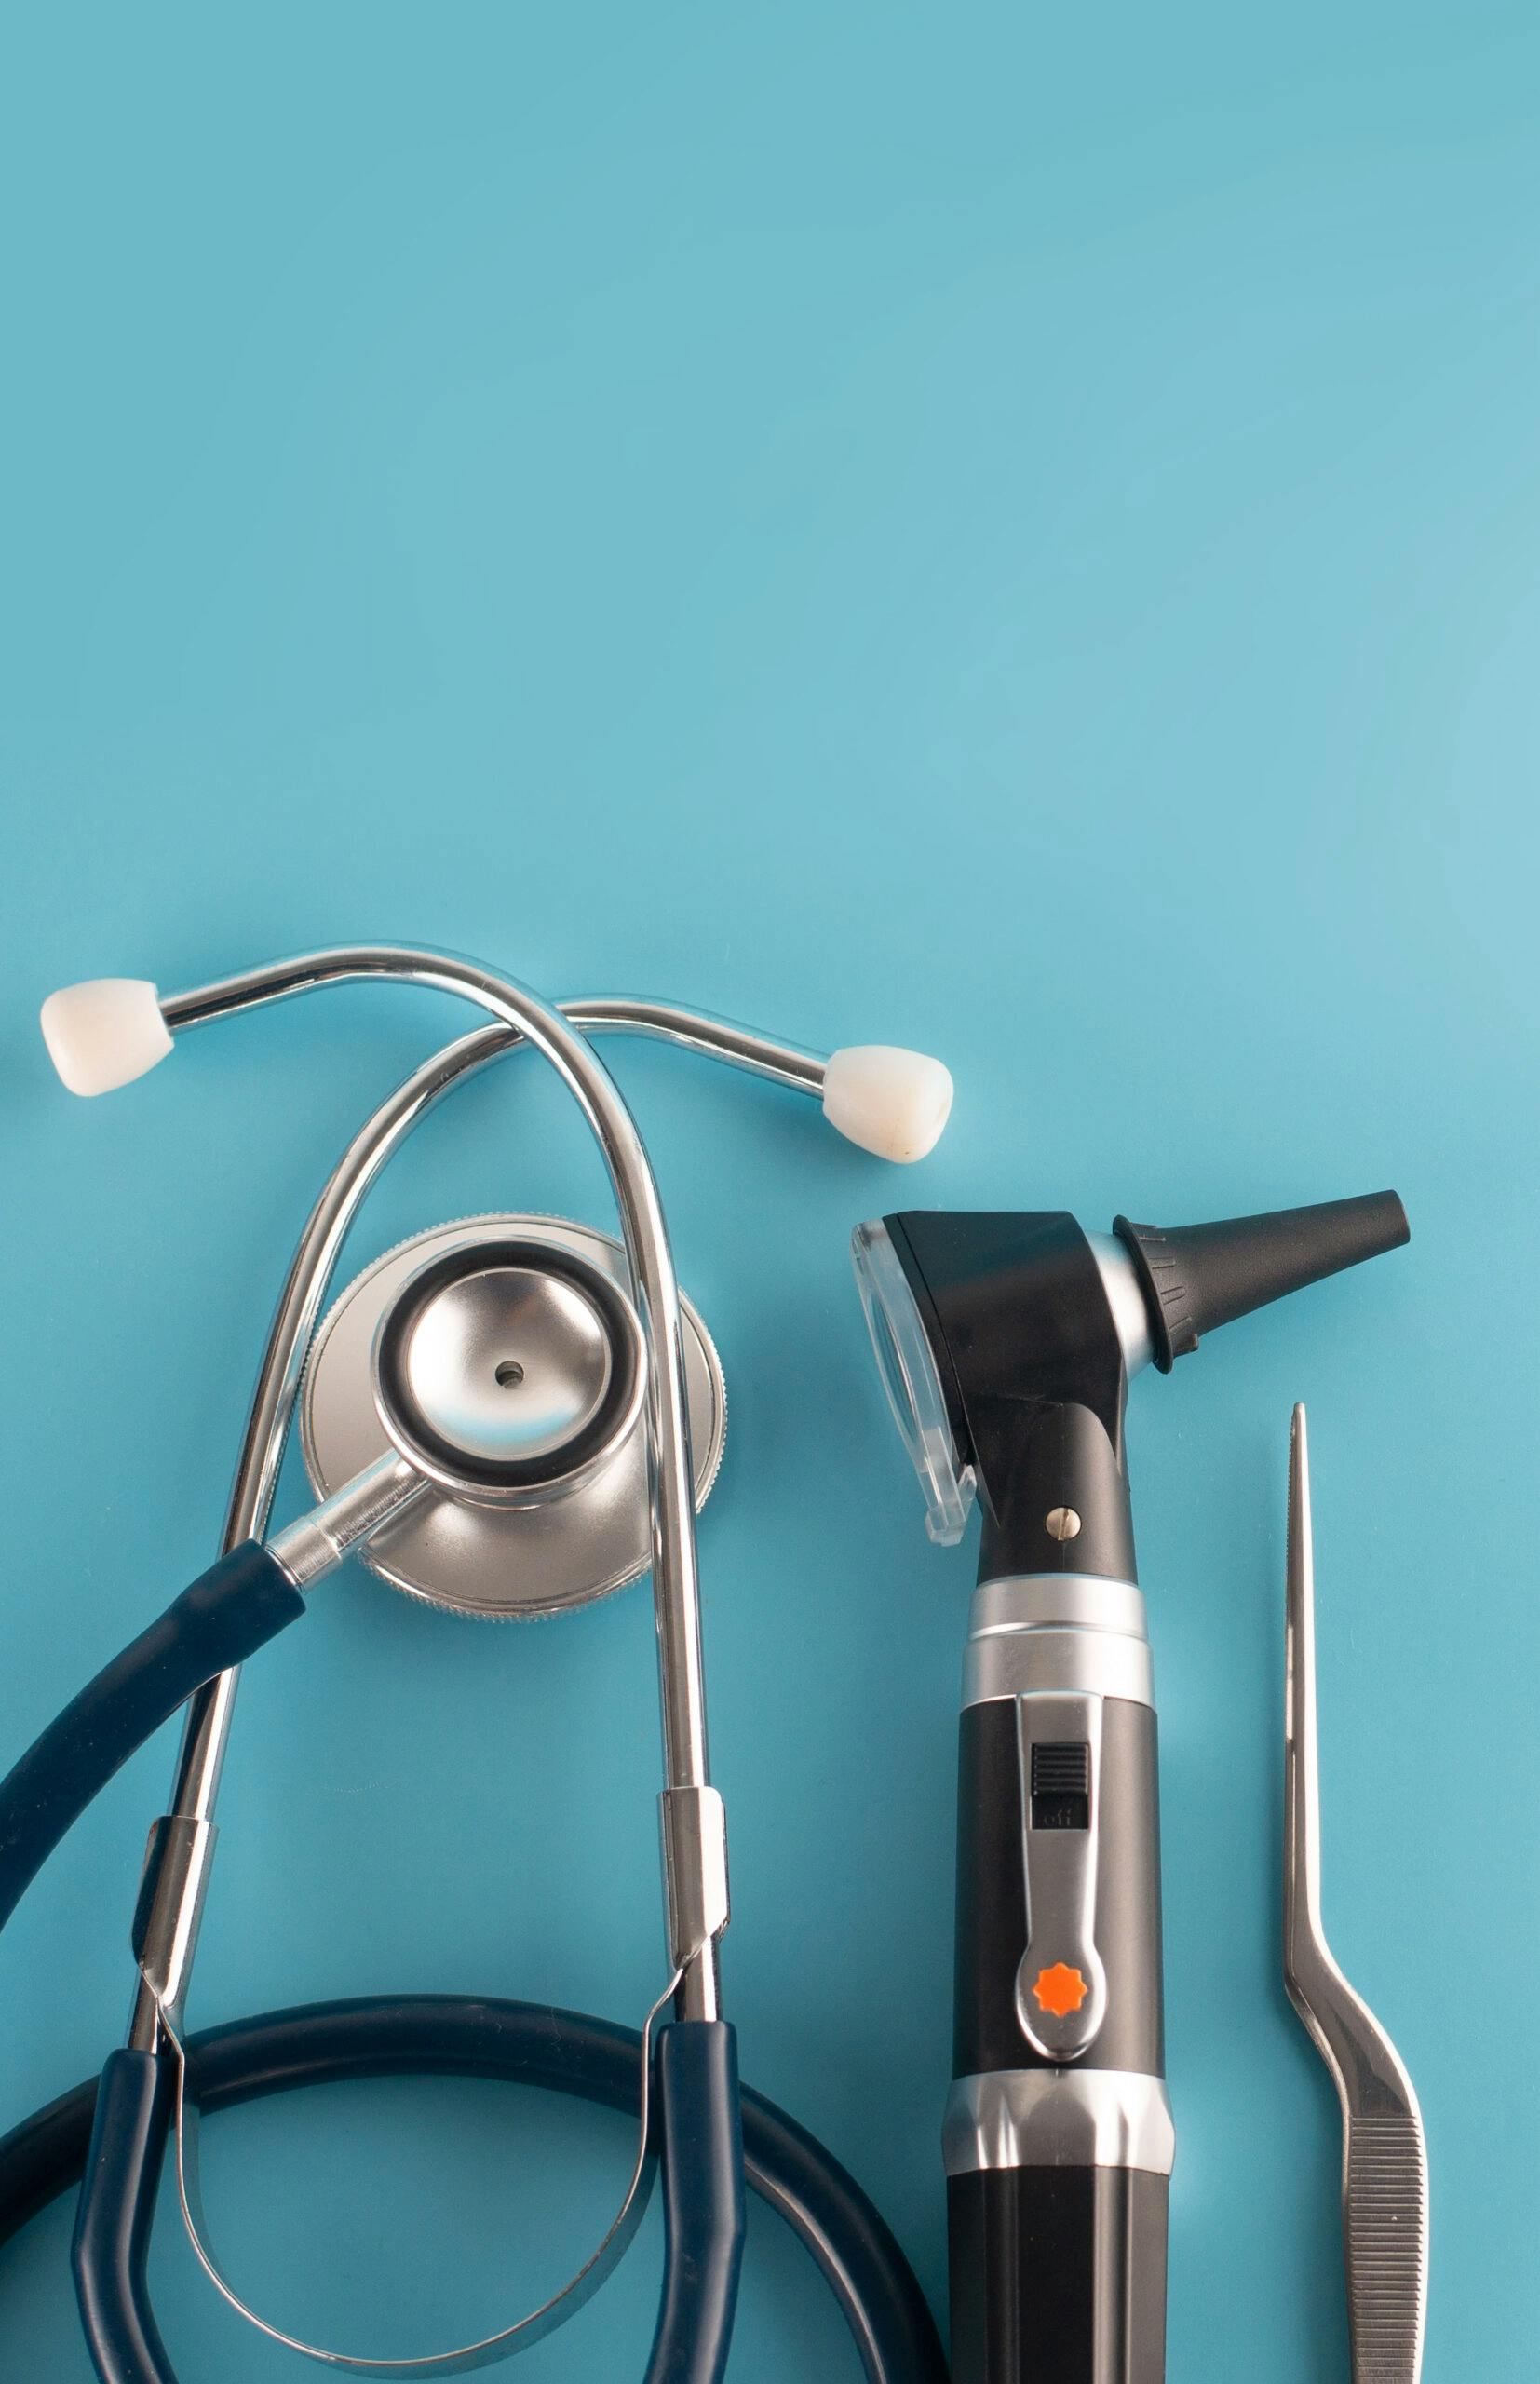 Image of Doctors tools like stethoscope